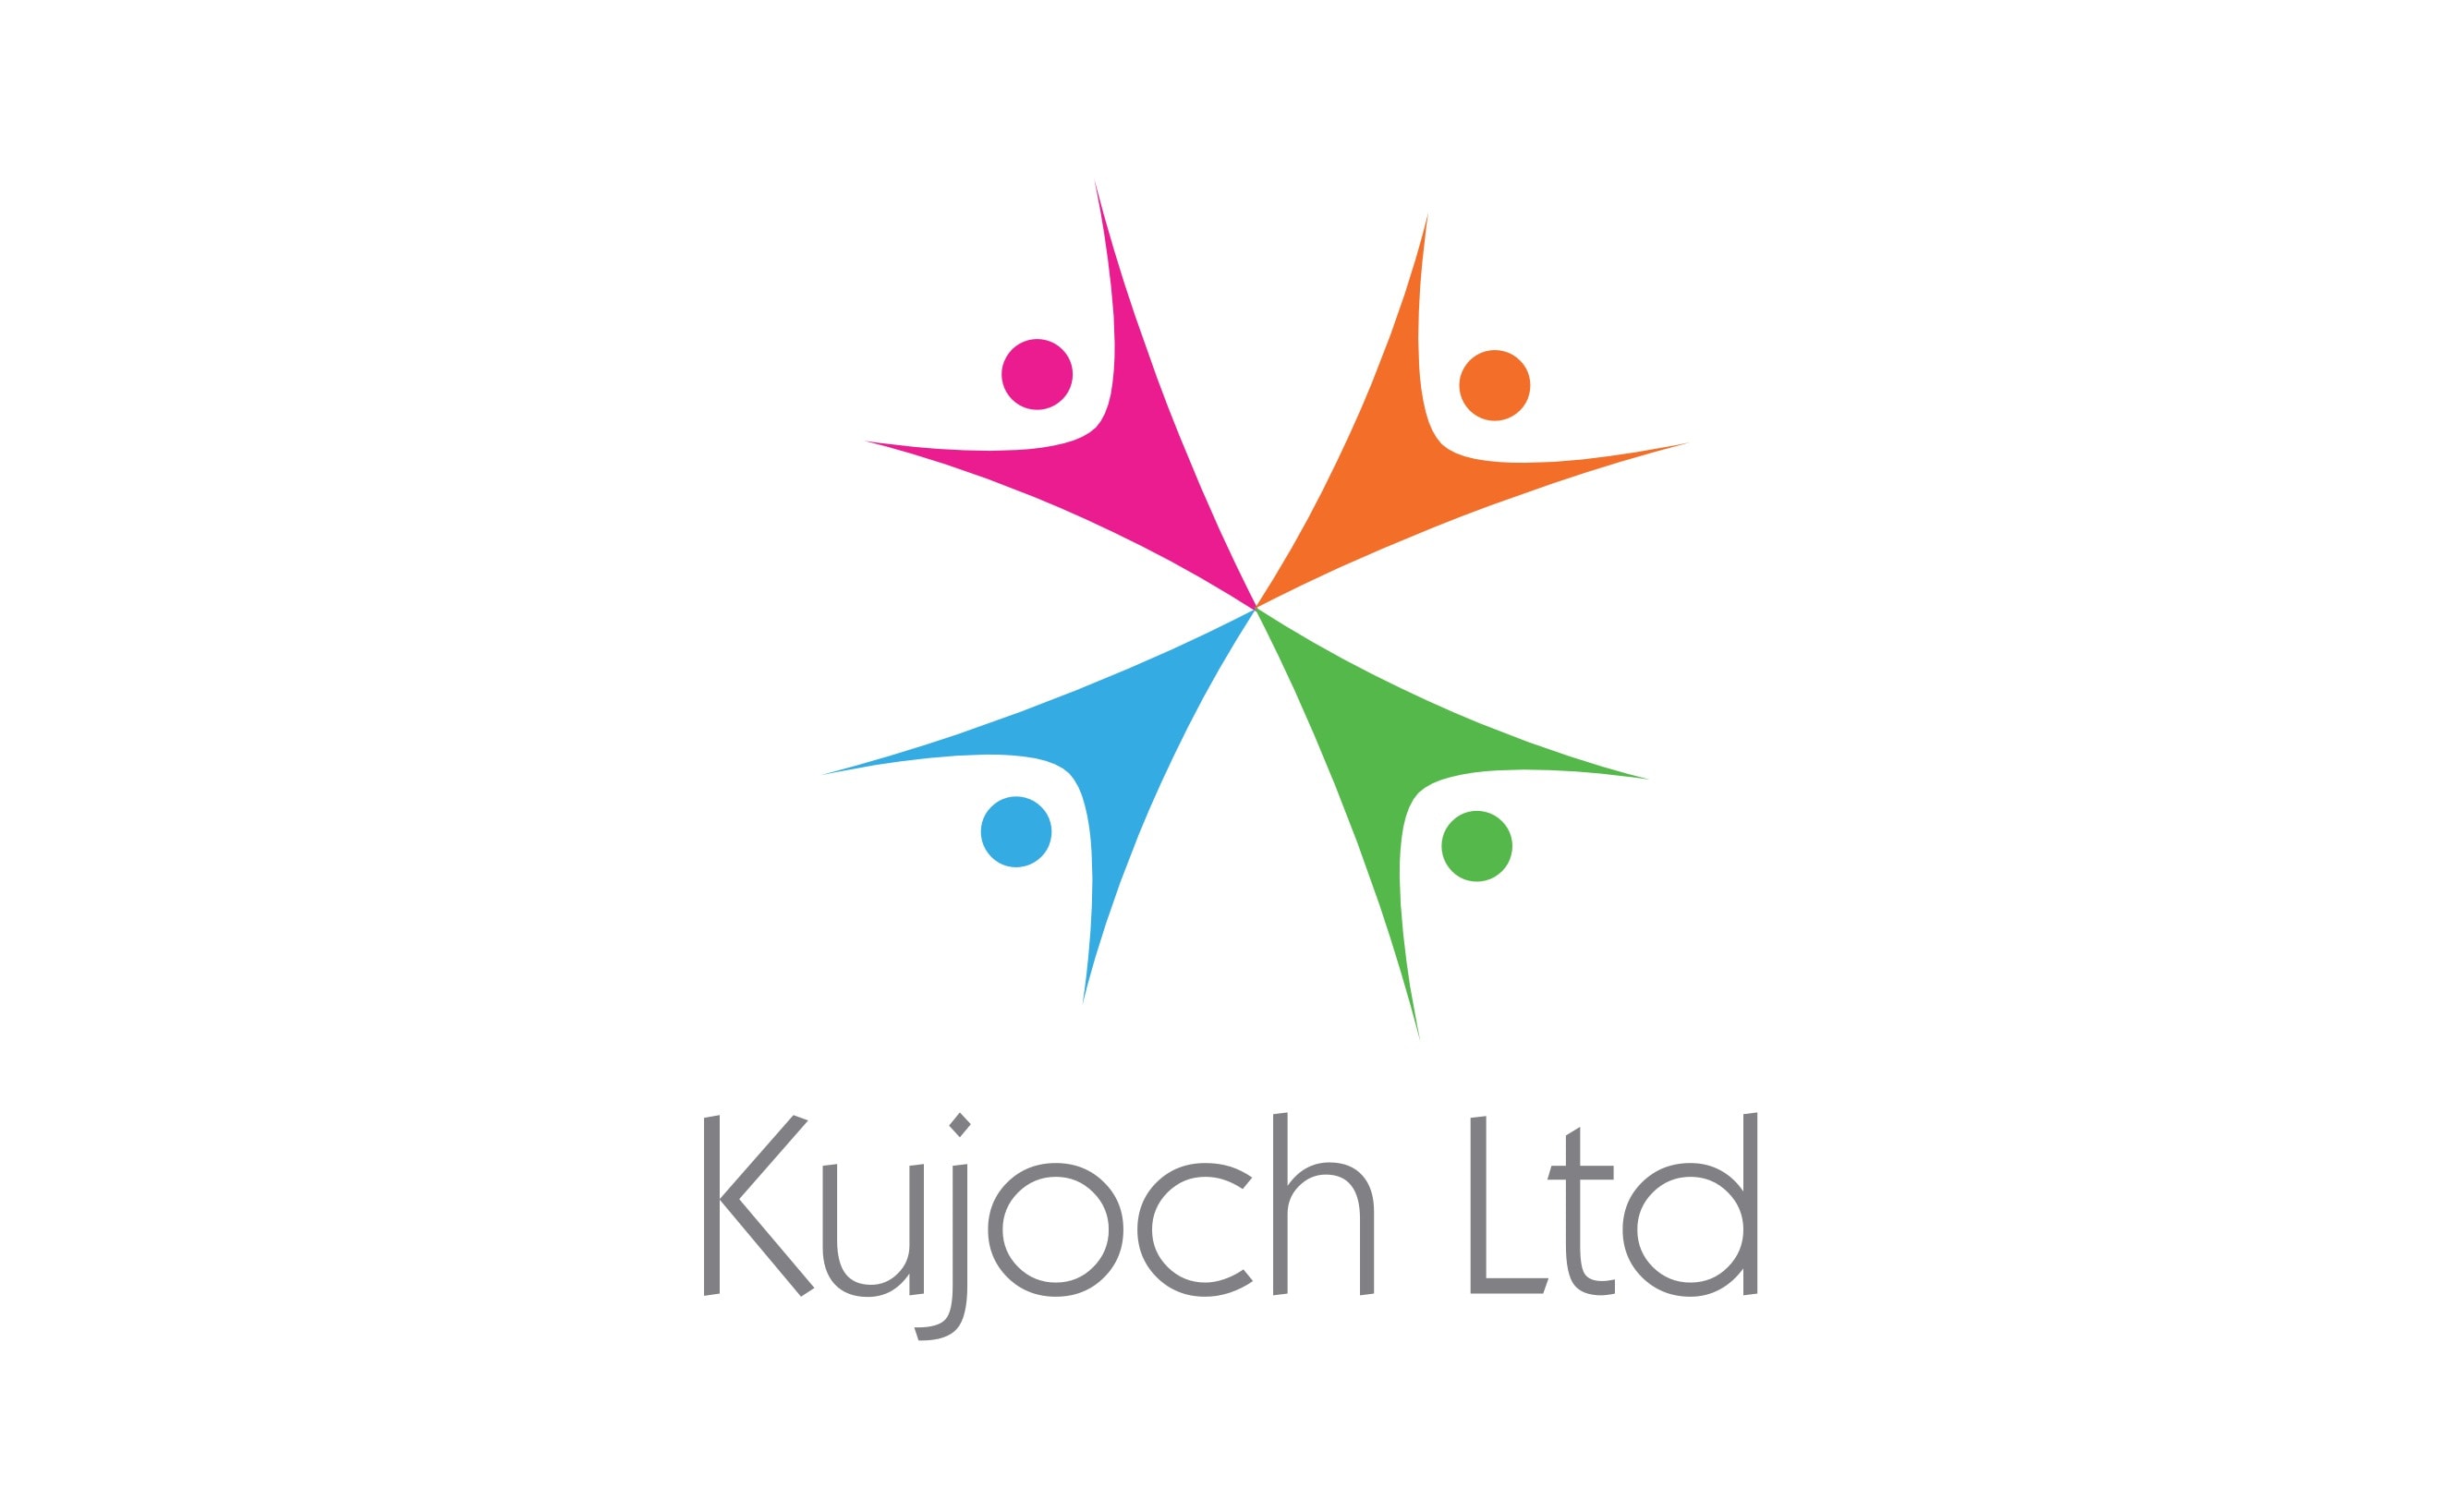 Kujoch Ltd